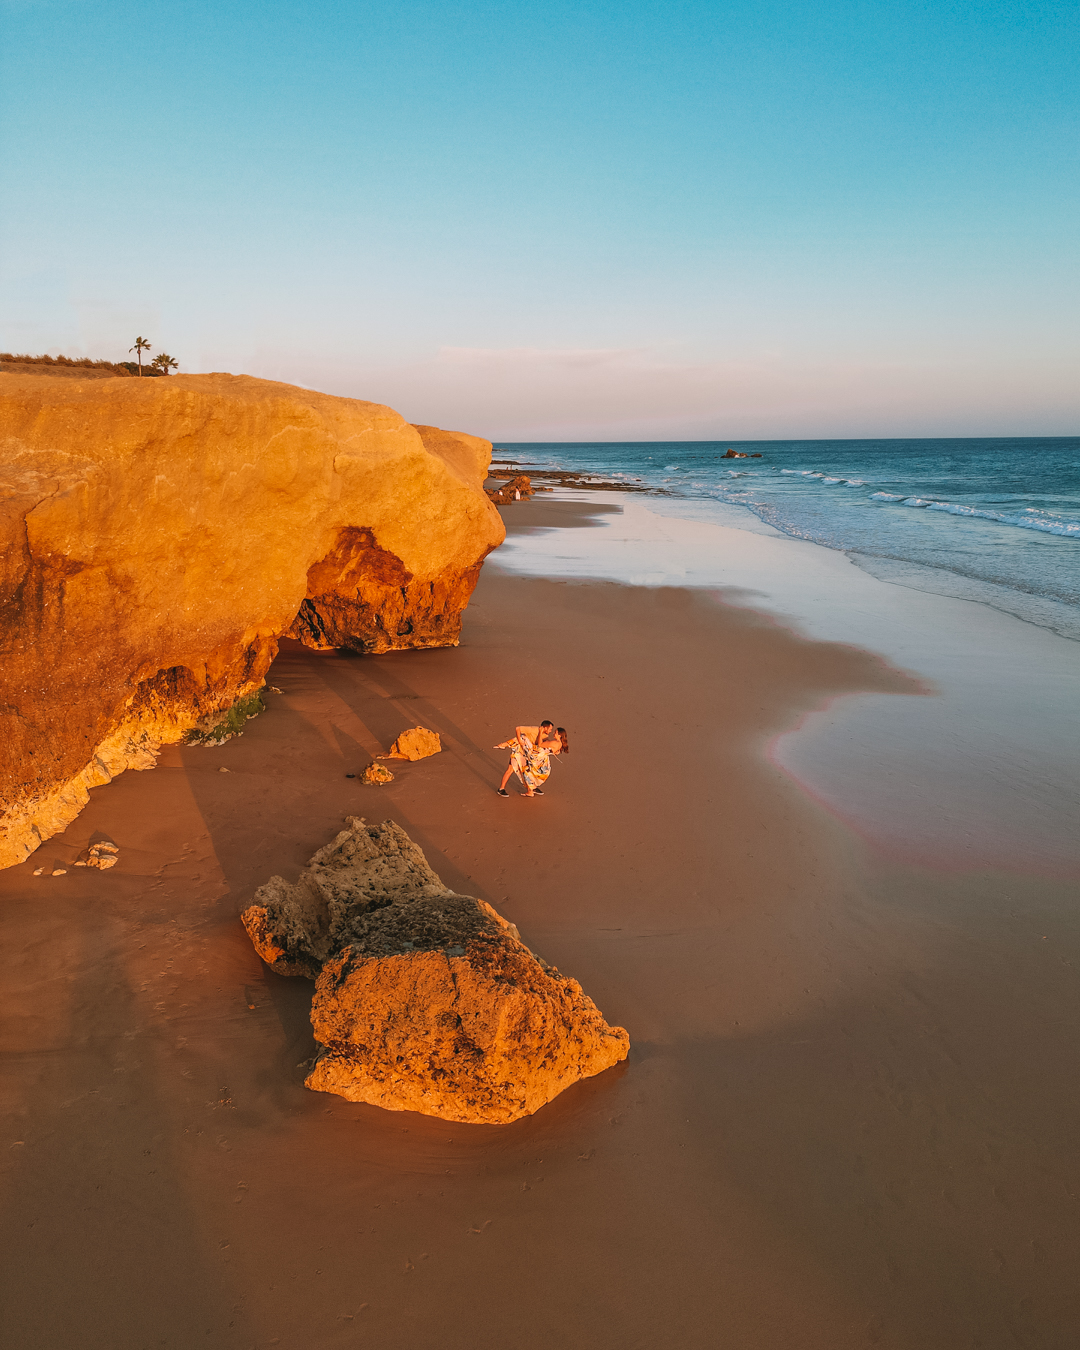 Sunset drone photo over Praia da Gale - Top spots to visit in the Algarve